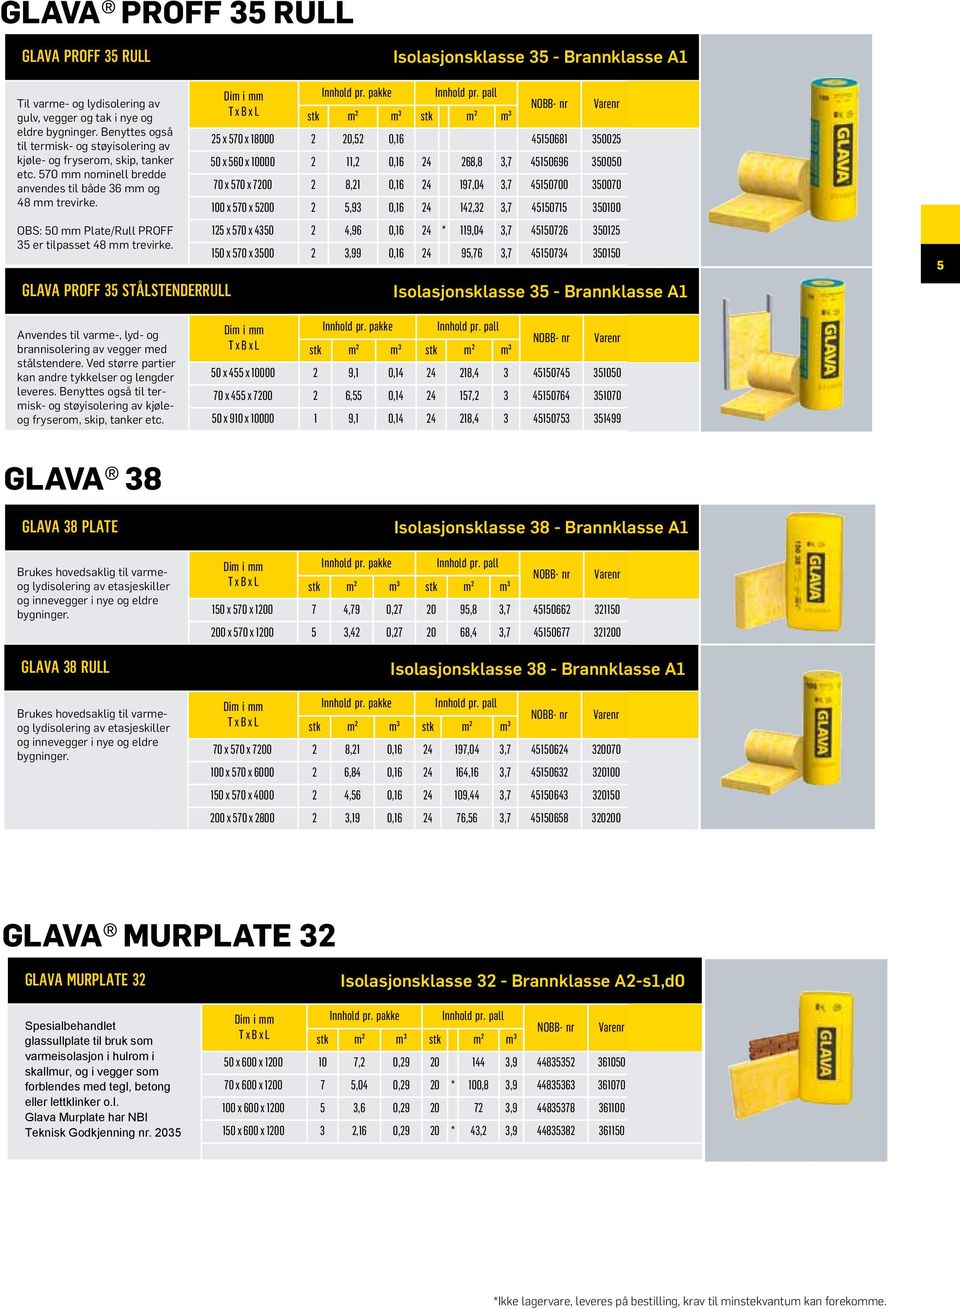 PRODUKTOVERSIKT GLAVA PROFF 35 GLAVA 38 GLAVA MURPLATE 32 JANUAR 2012 BYGG  - PDF Free Download